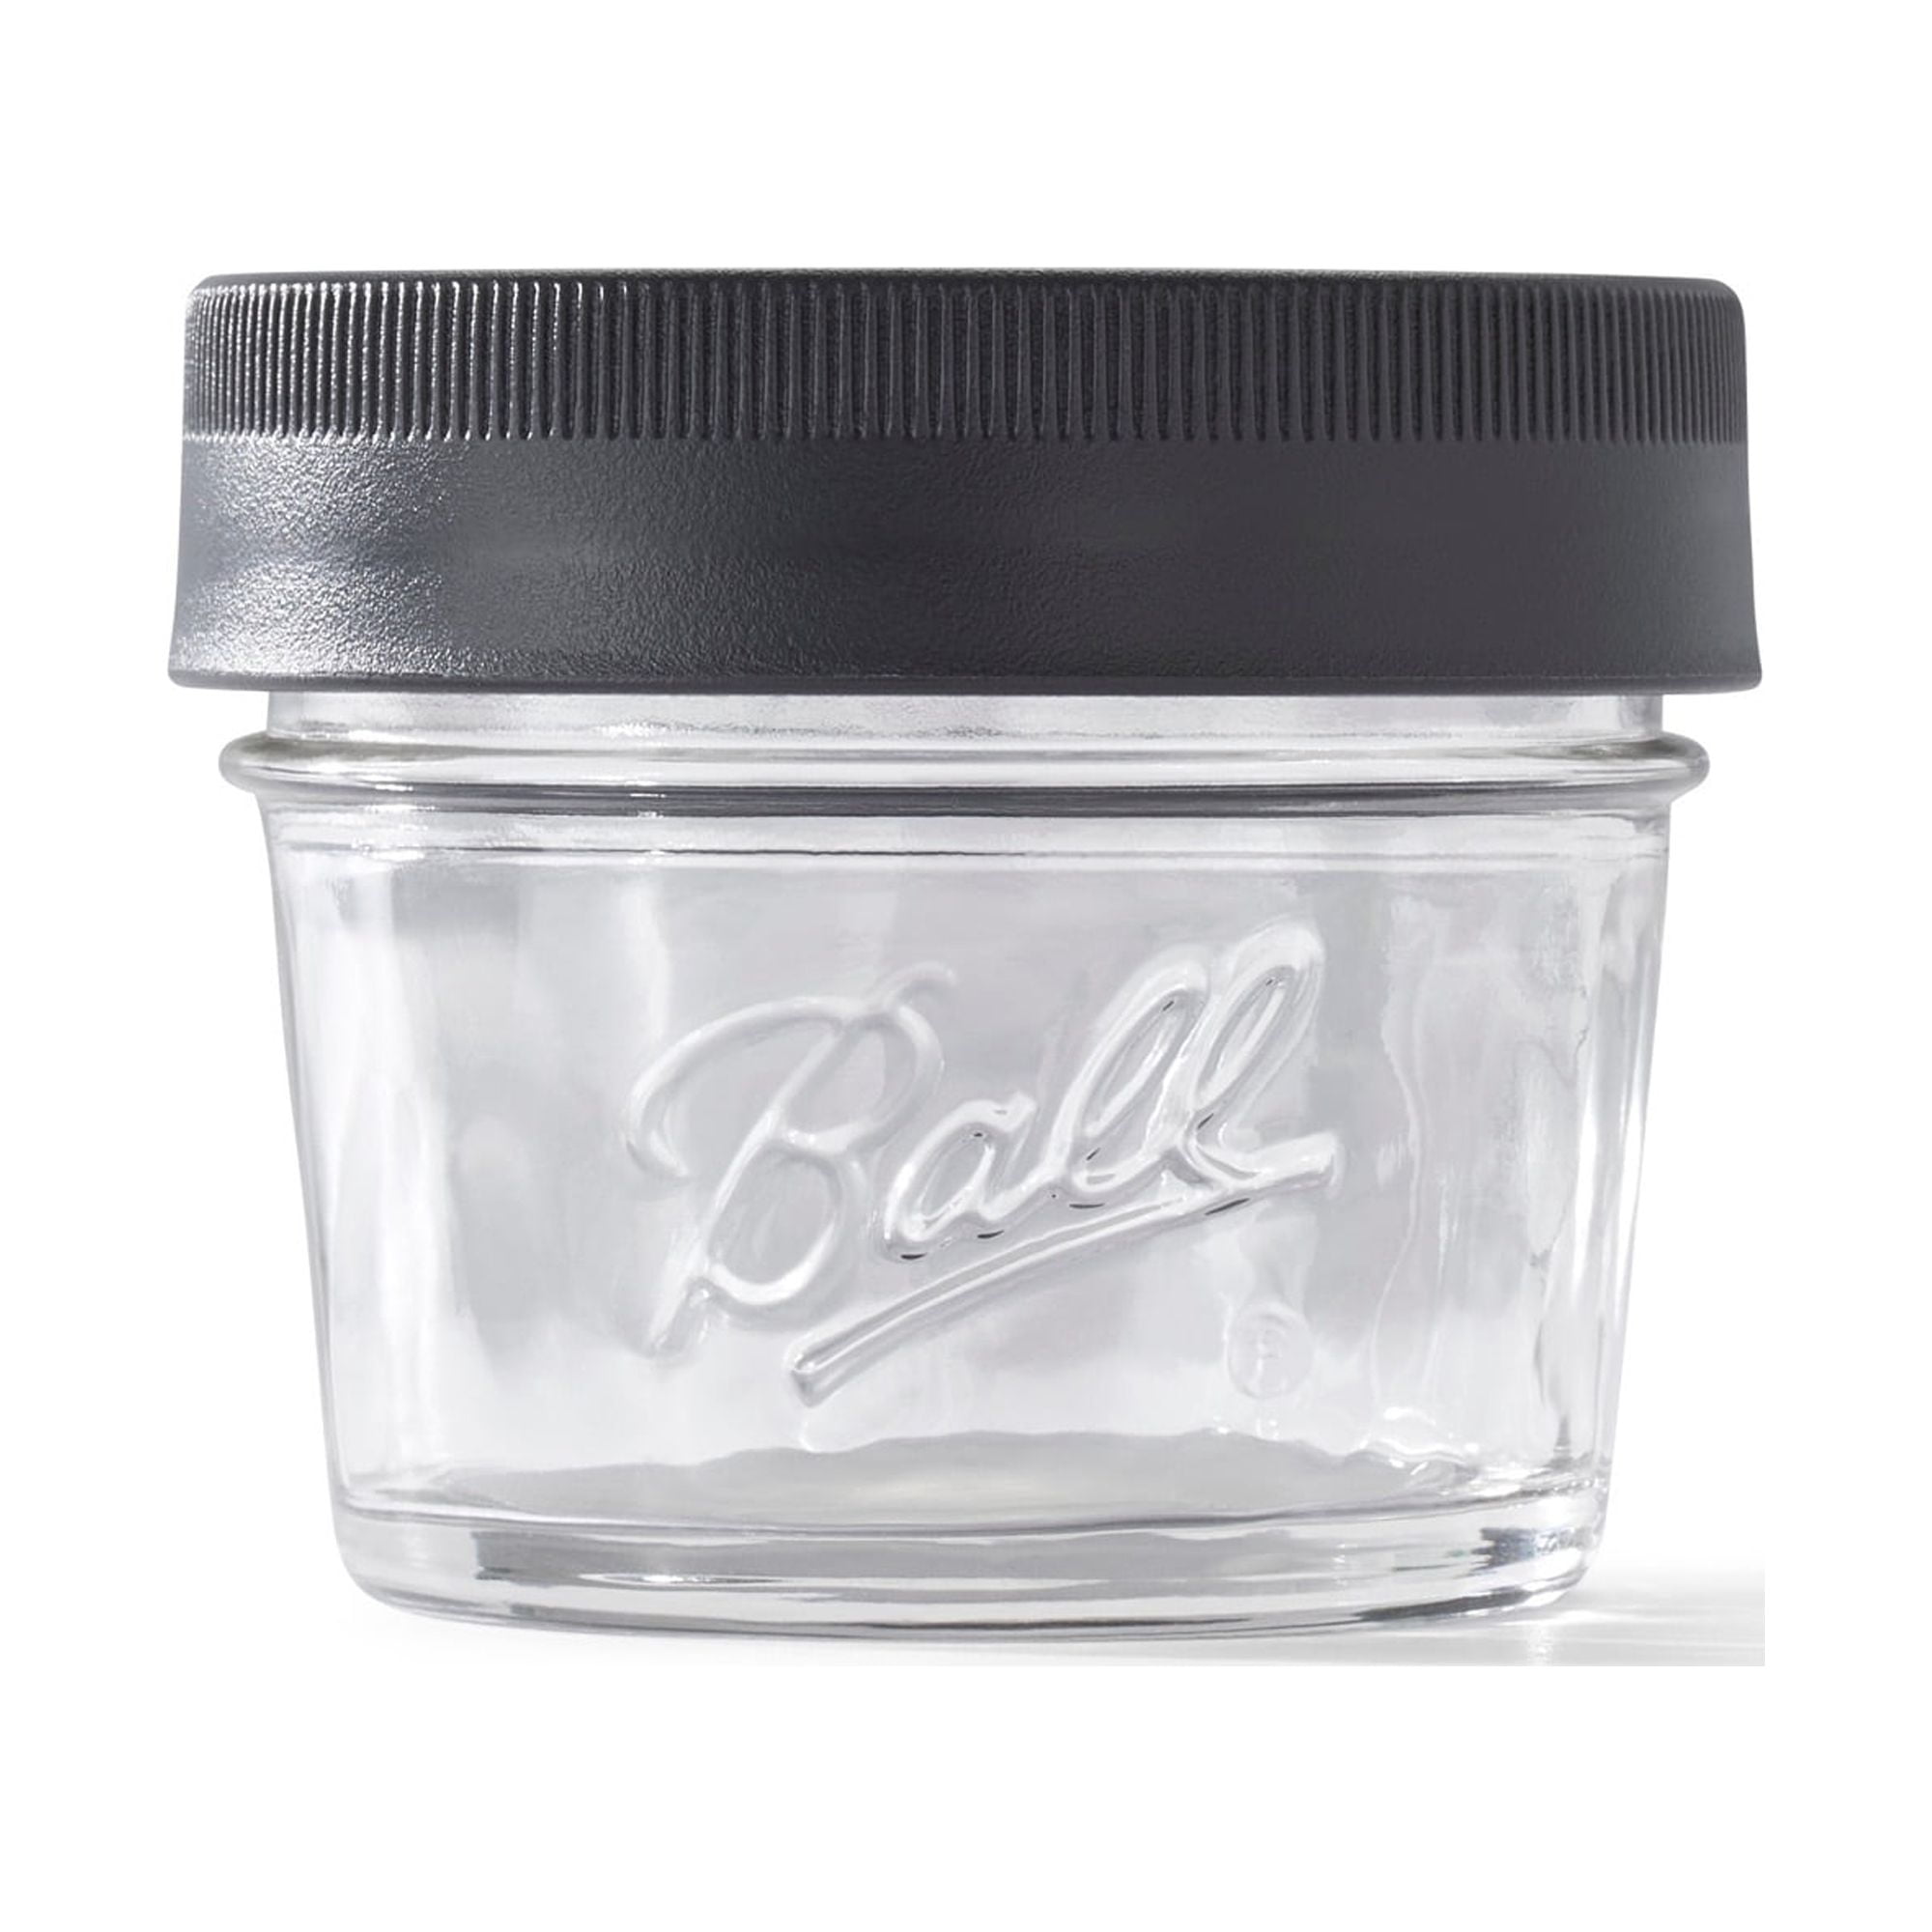 Ball Mini Mouth Storage Jar 4 oz 4 pk - Ace Hardware